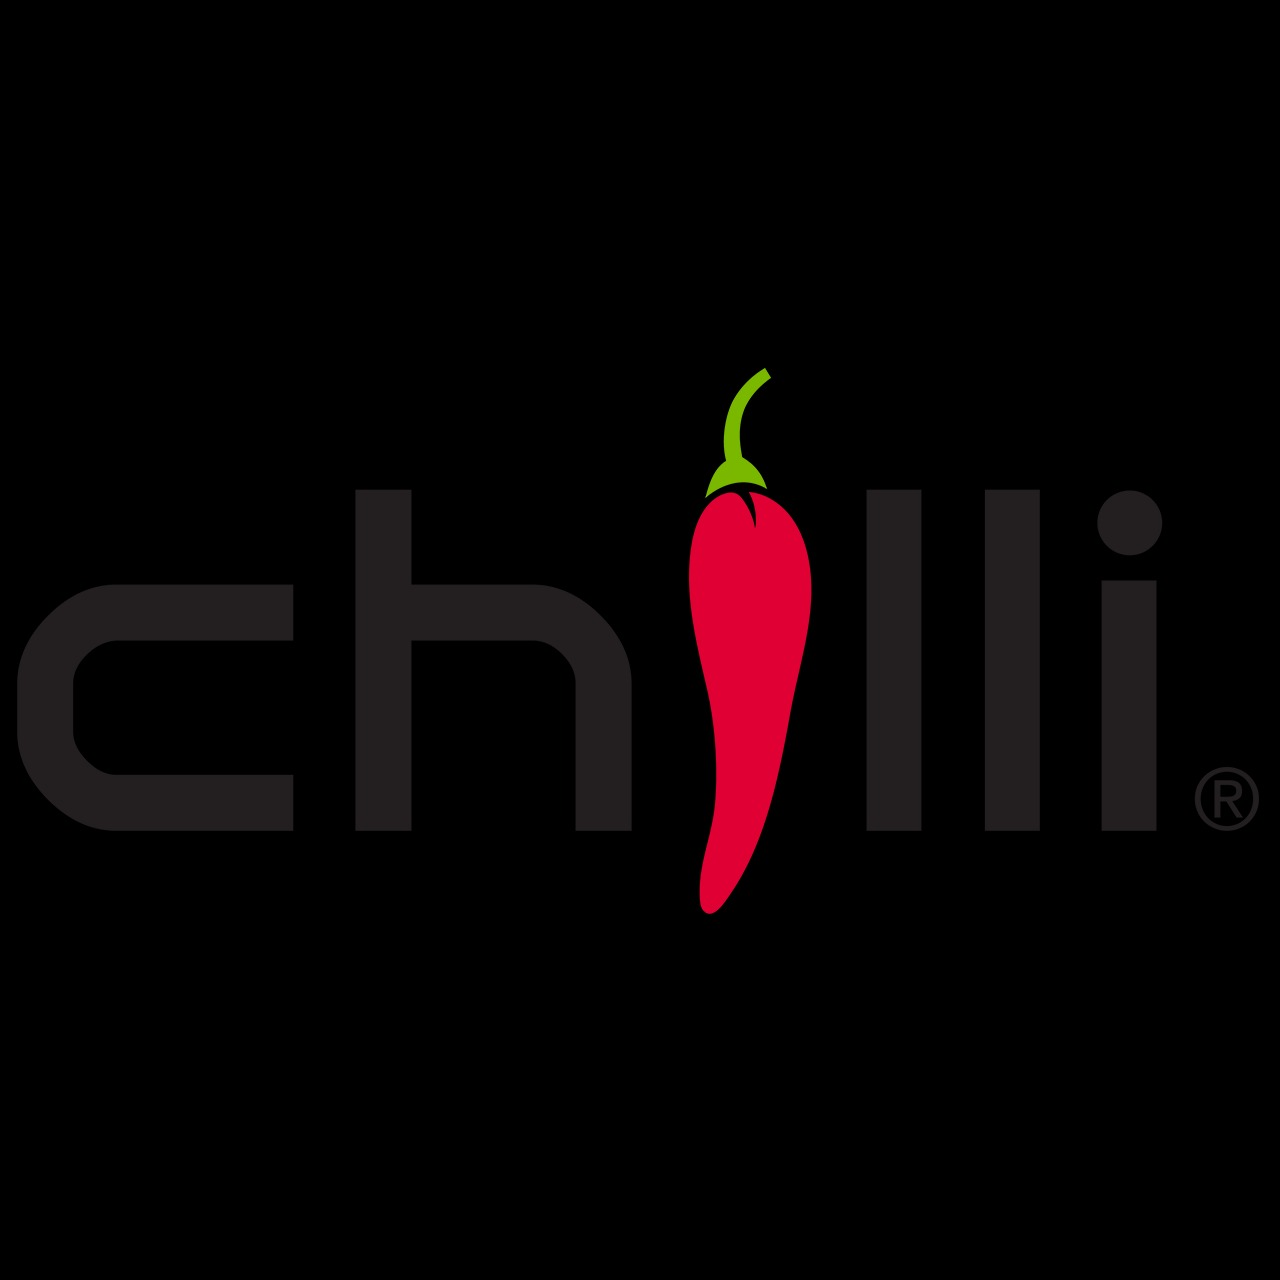 Chilli Logo